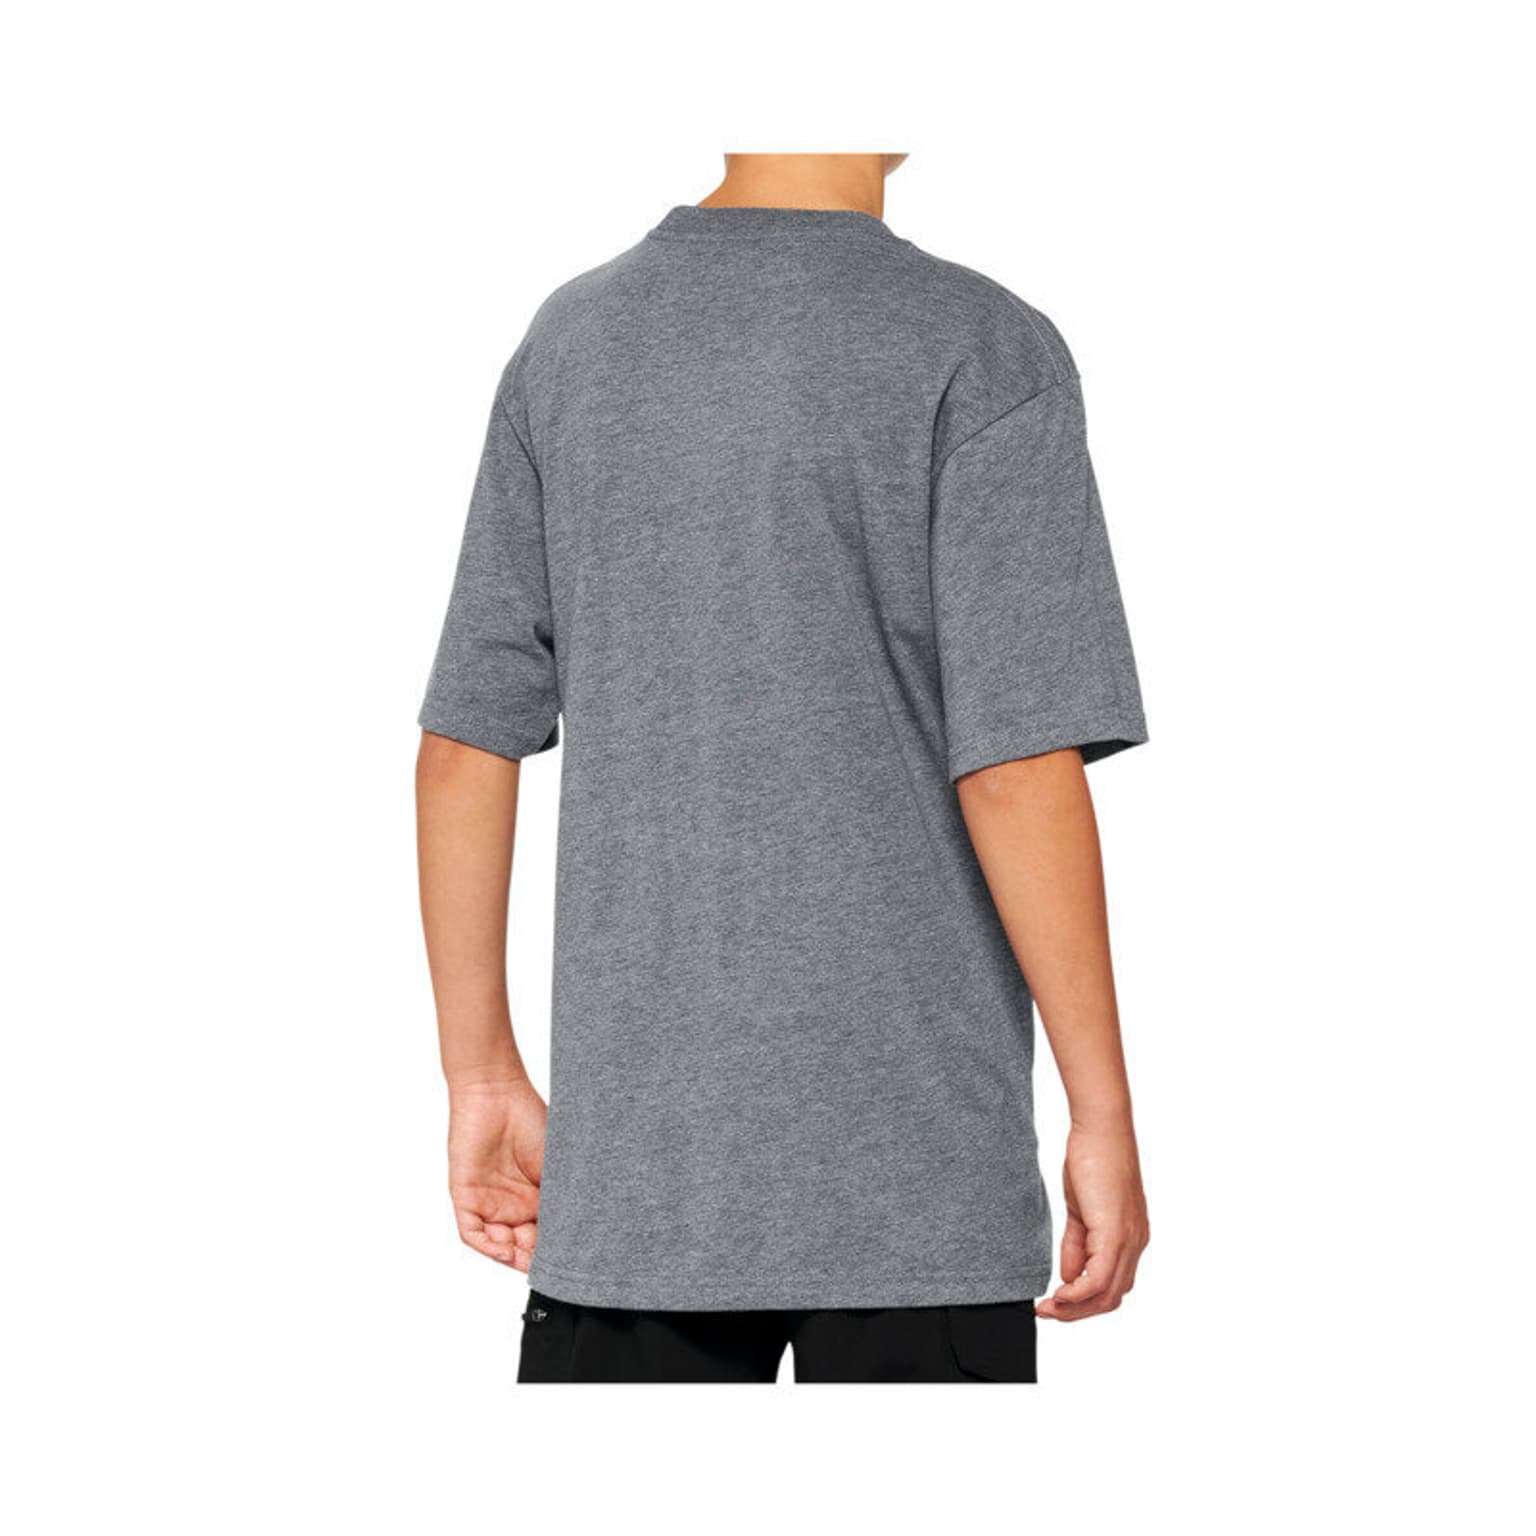 100% 100% Manifesto Youth T-Shirt grigio-chiaro 2